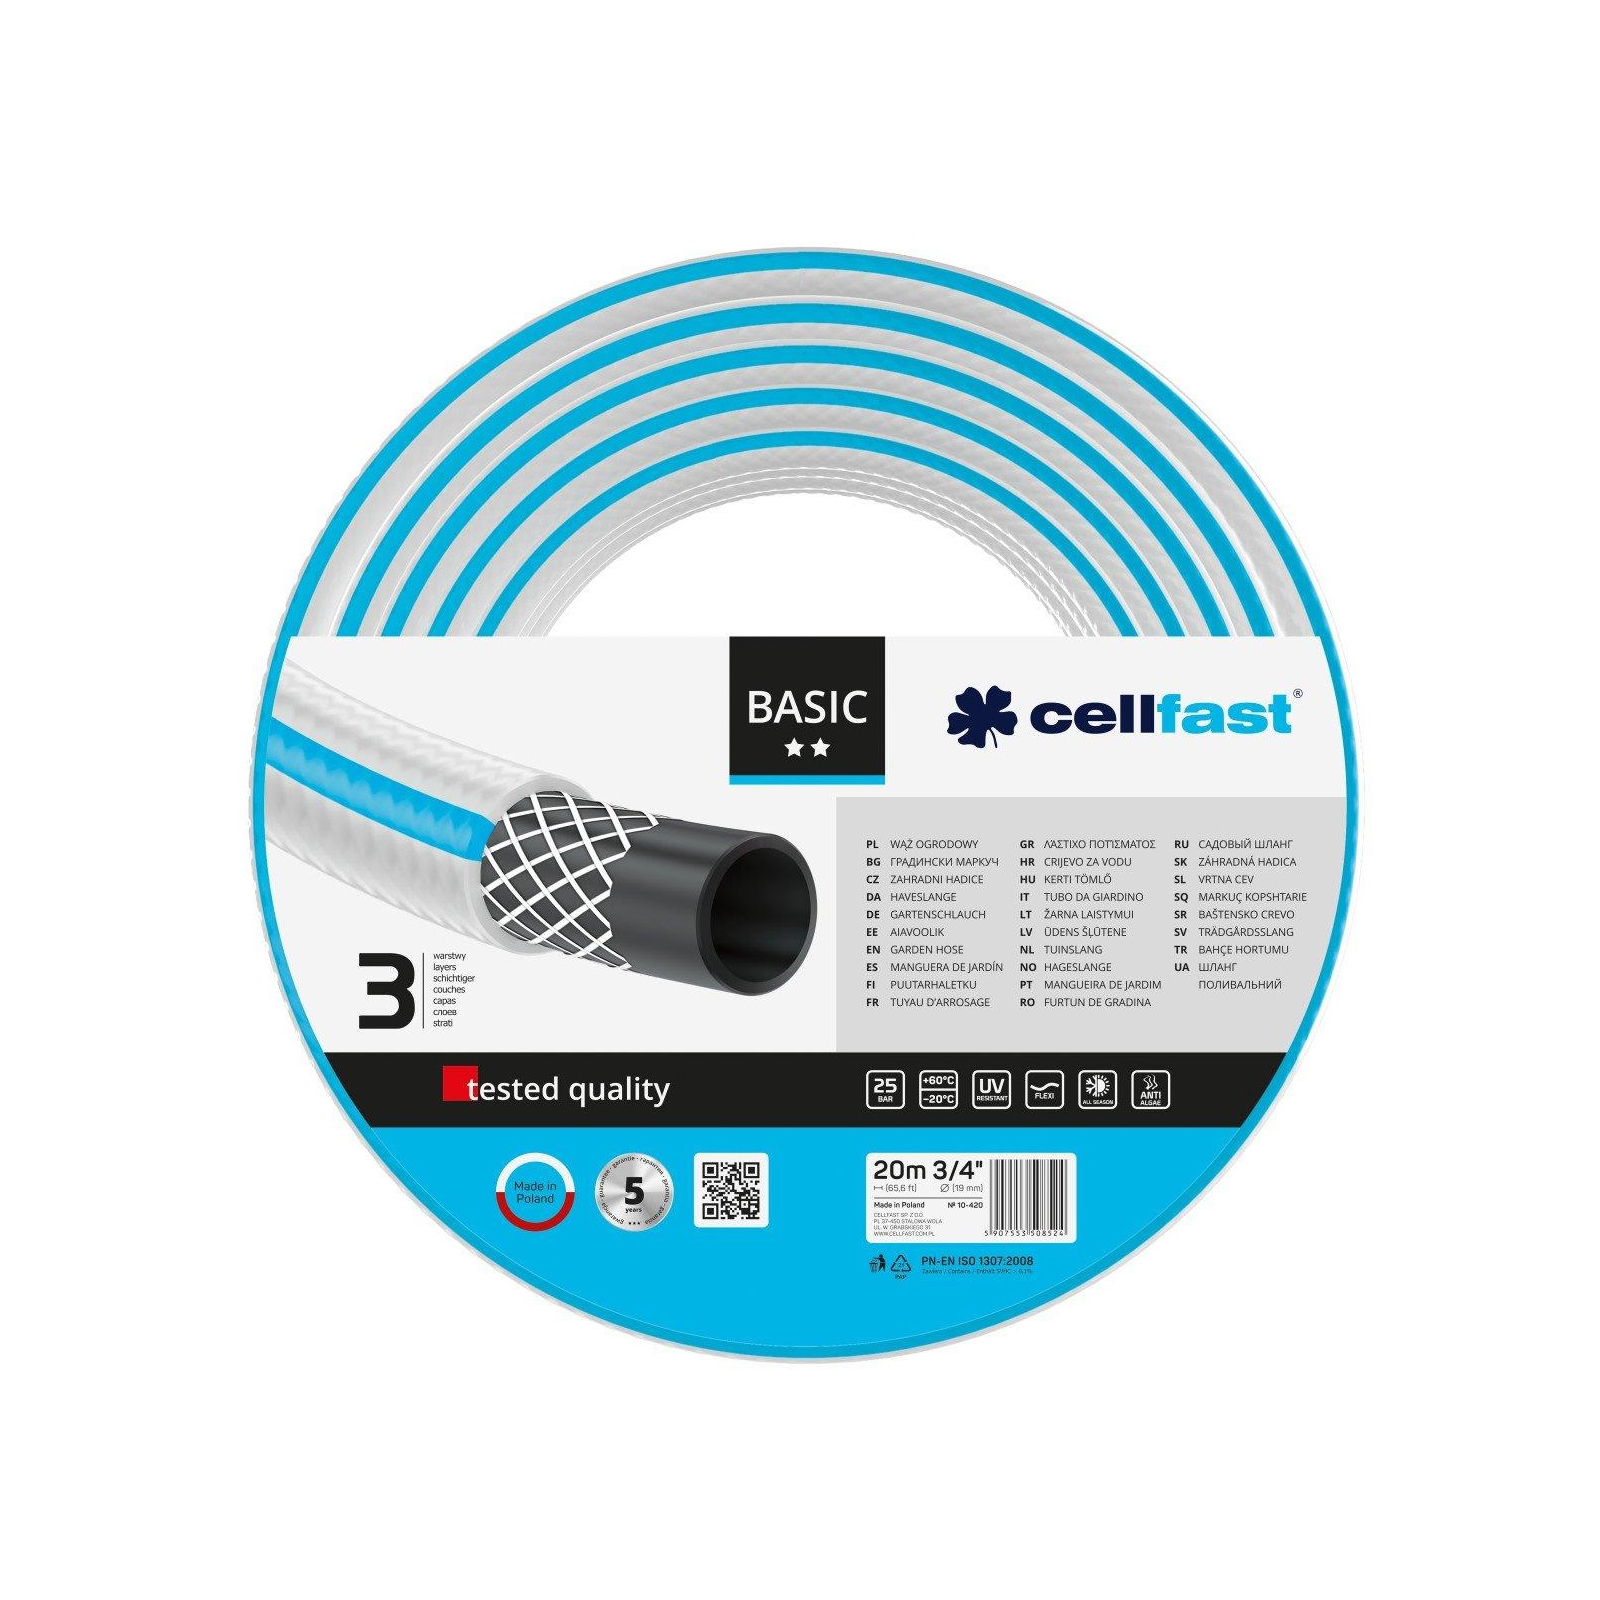 Поливочный шланг Cellfast BASIC, 3/4', 50м, 3 слоя, до 25 Бар, -20…+60°C (10-422)